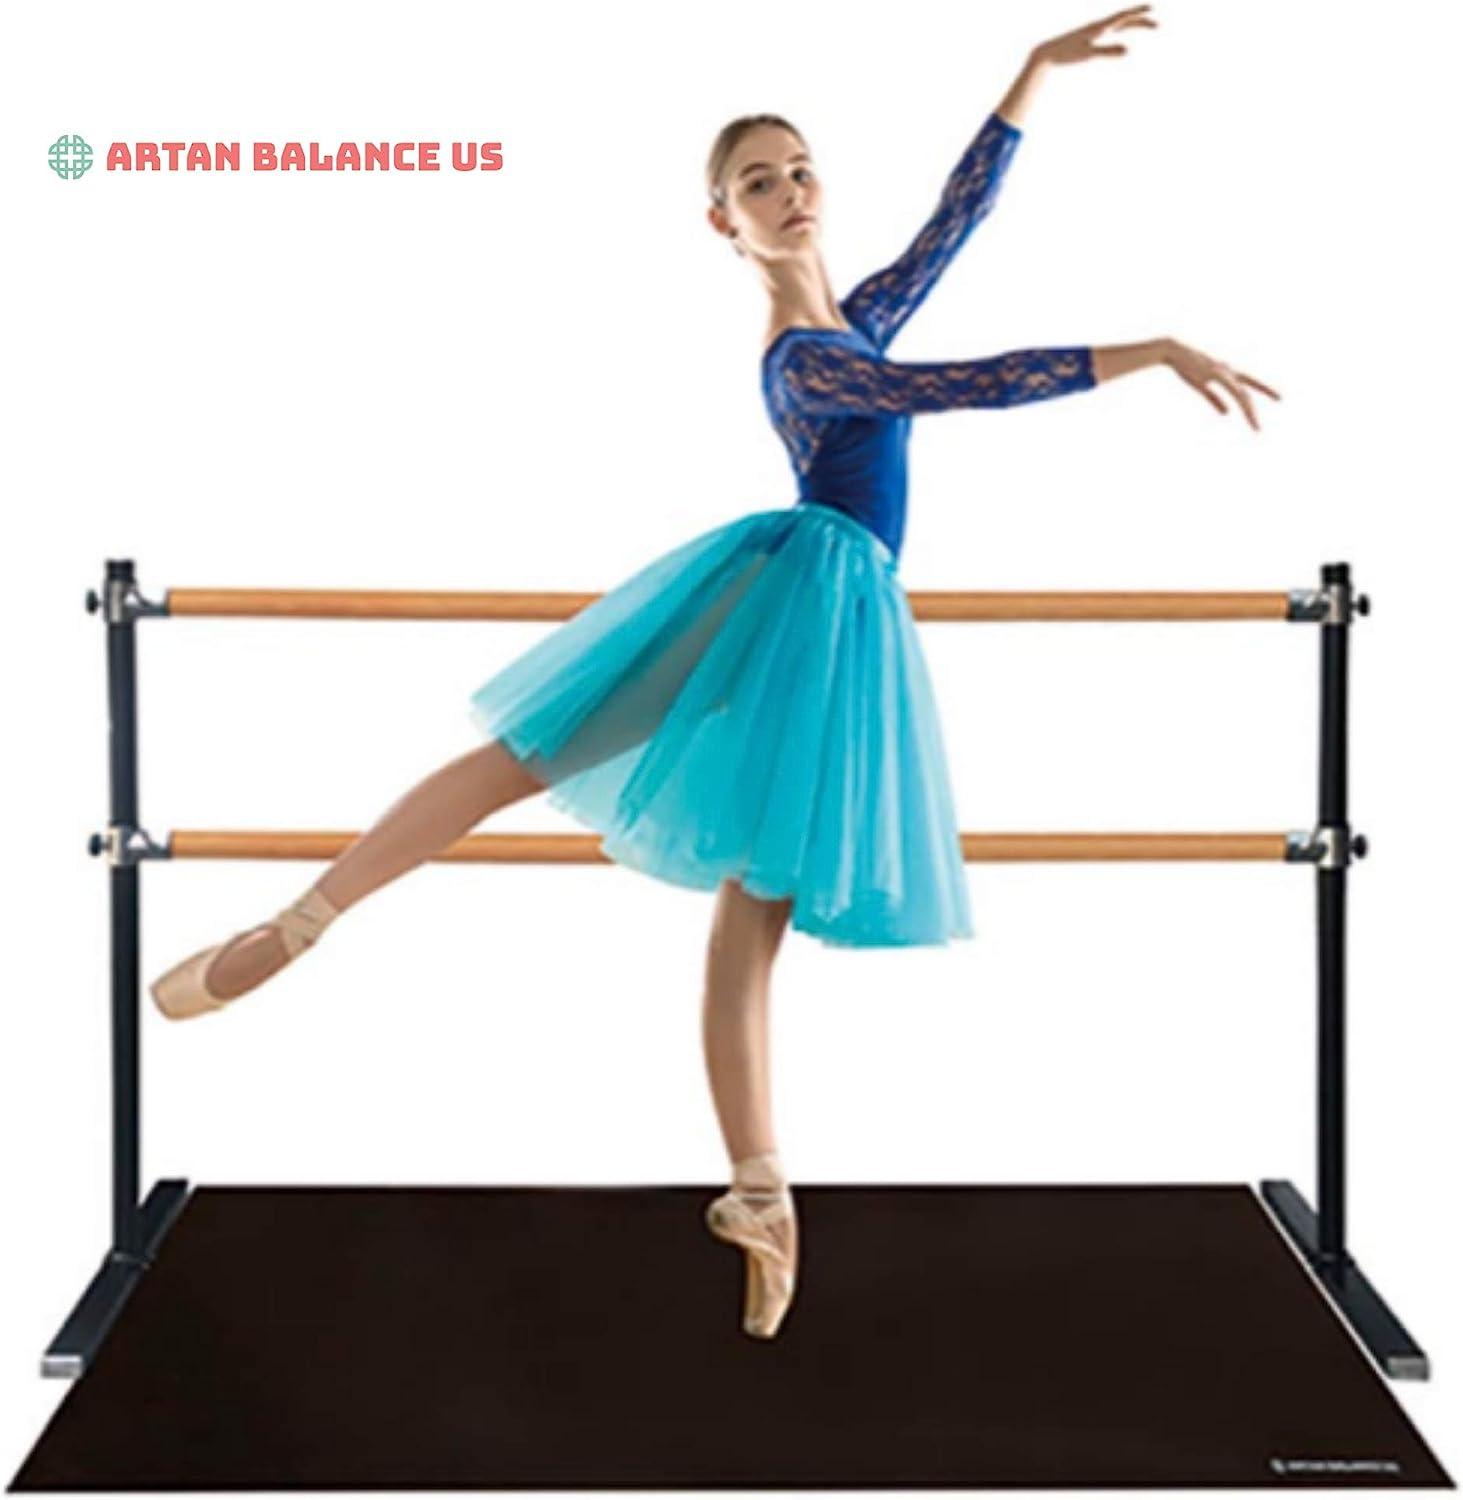 Artan Balance Portable Dance Floor Tiles for Ballet, Tap, Jazz